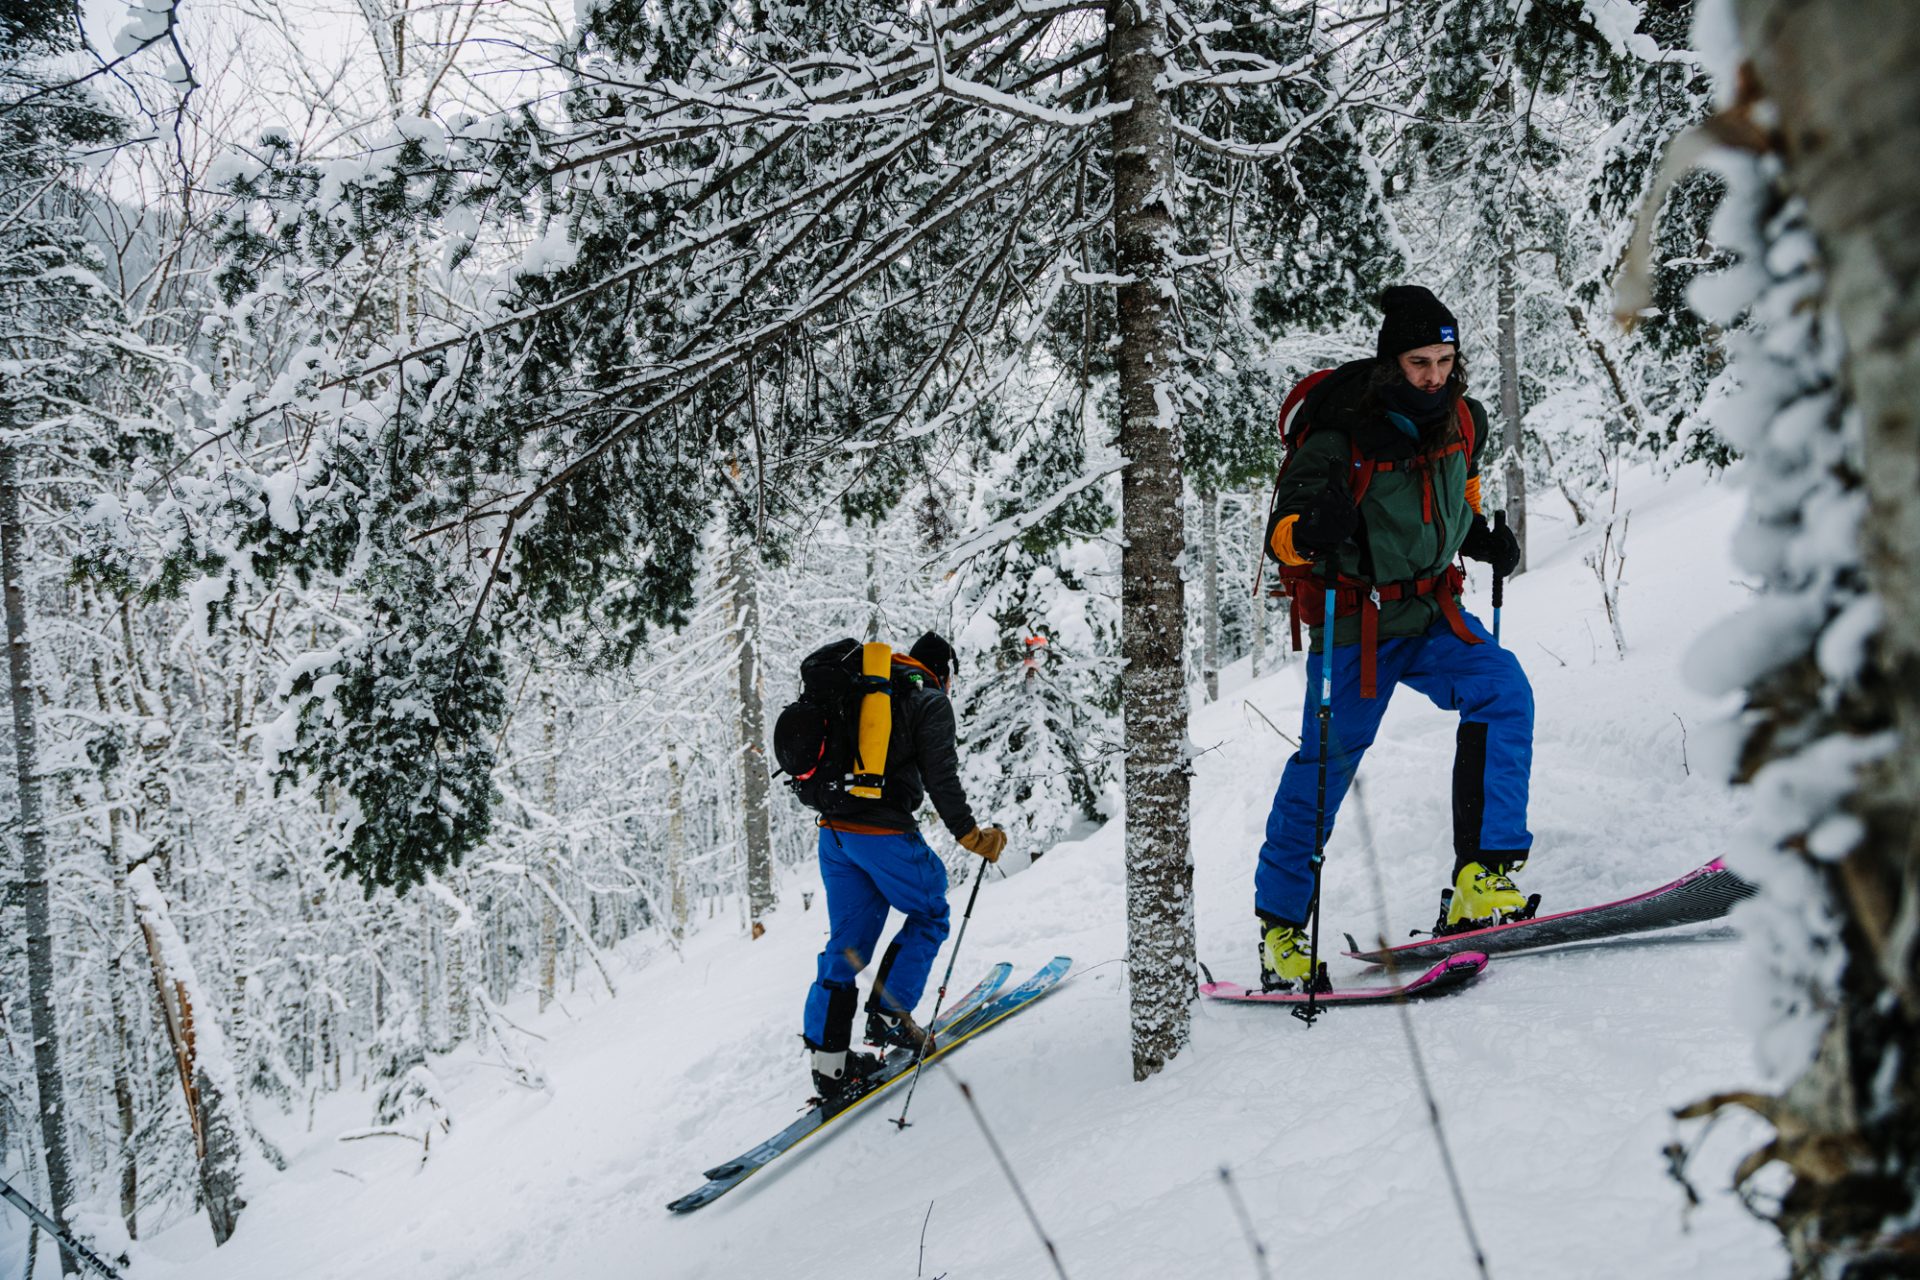 Le ski de montagne dit "skimo"